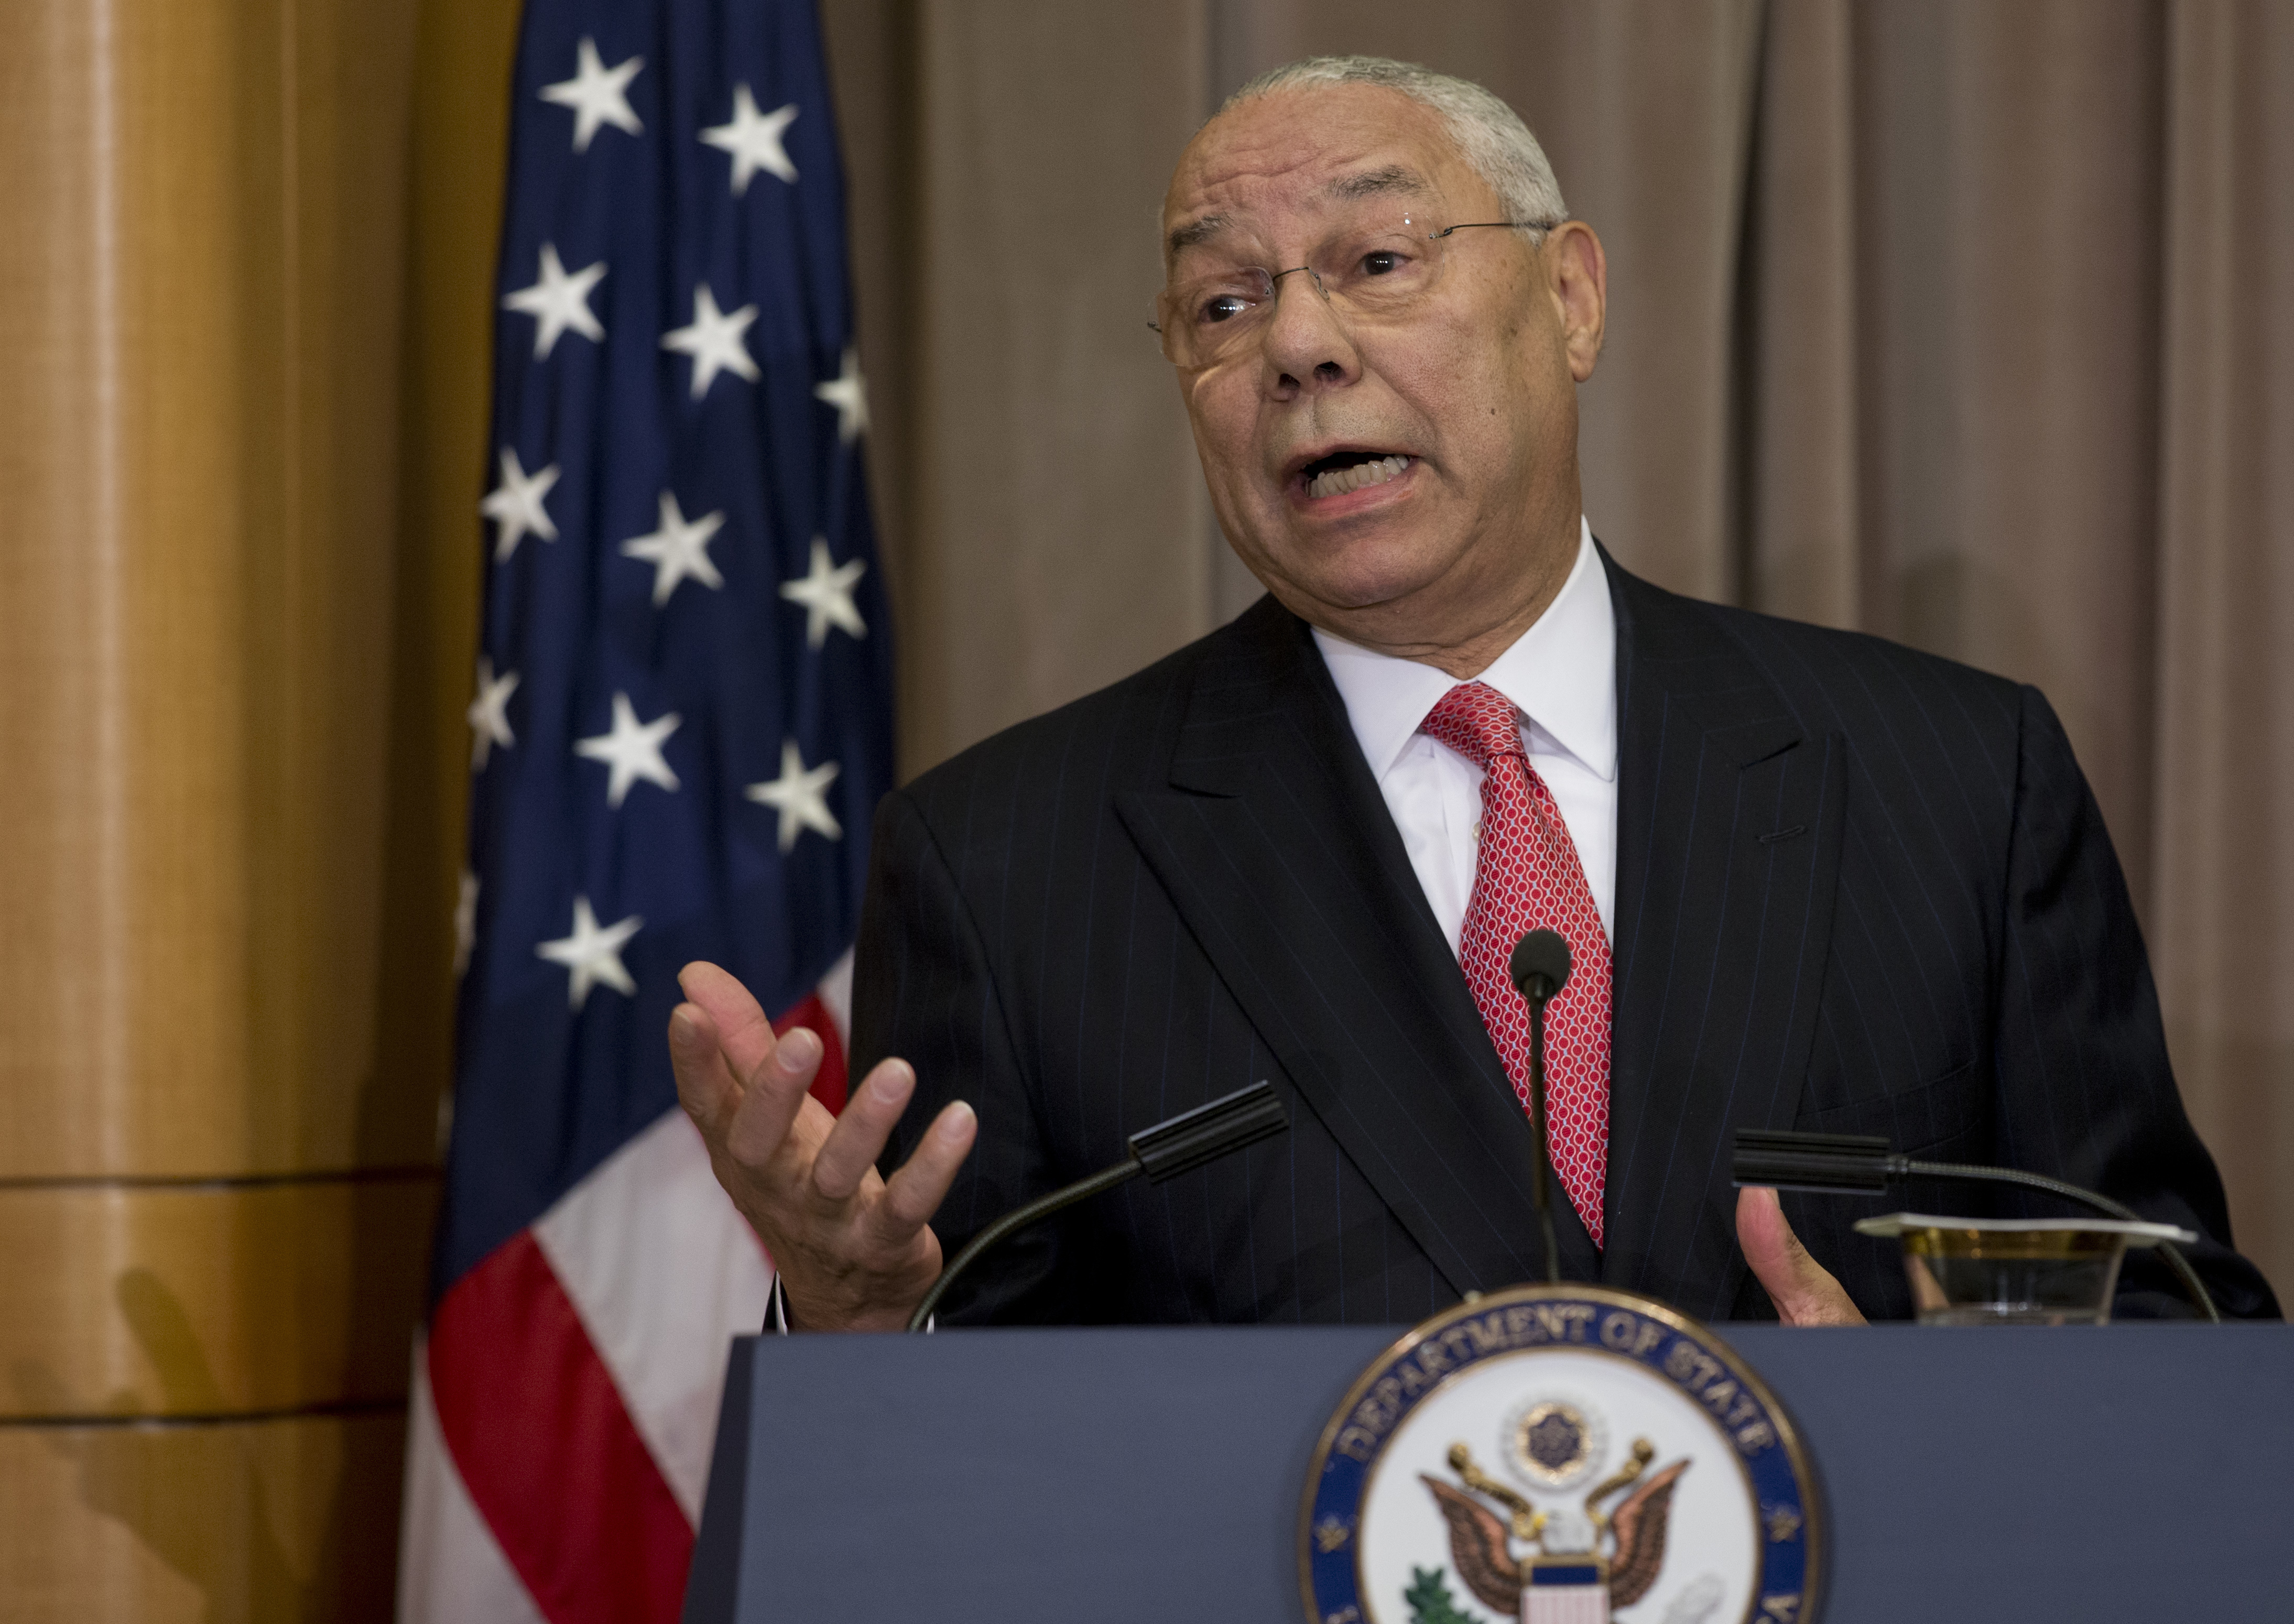 Colin Powell will vote for Democrat Joe Biden in 2020 presidential election